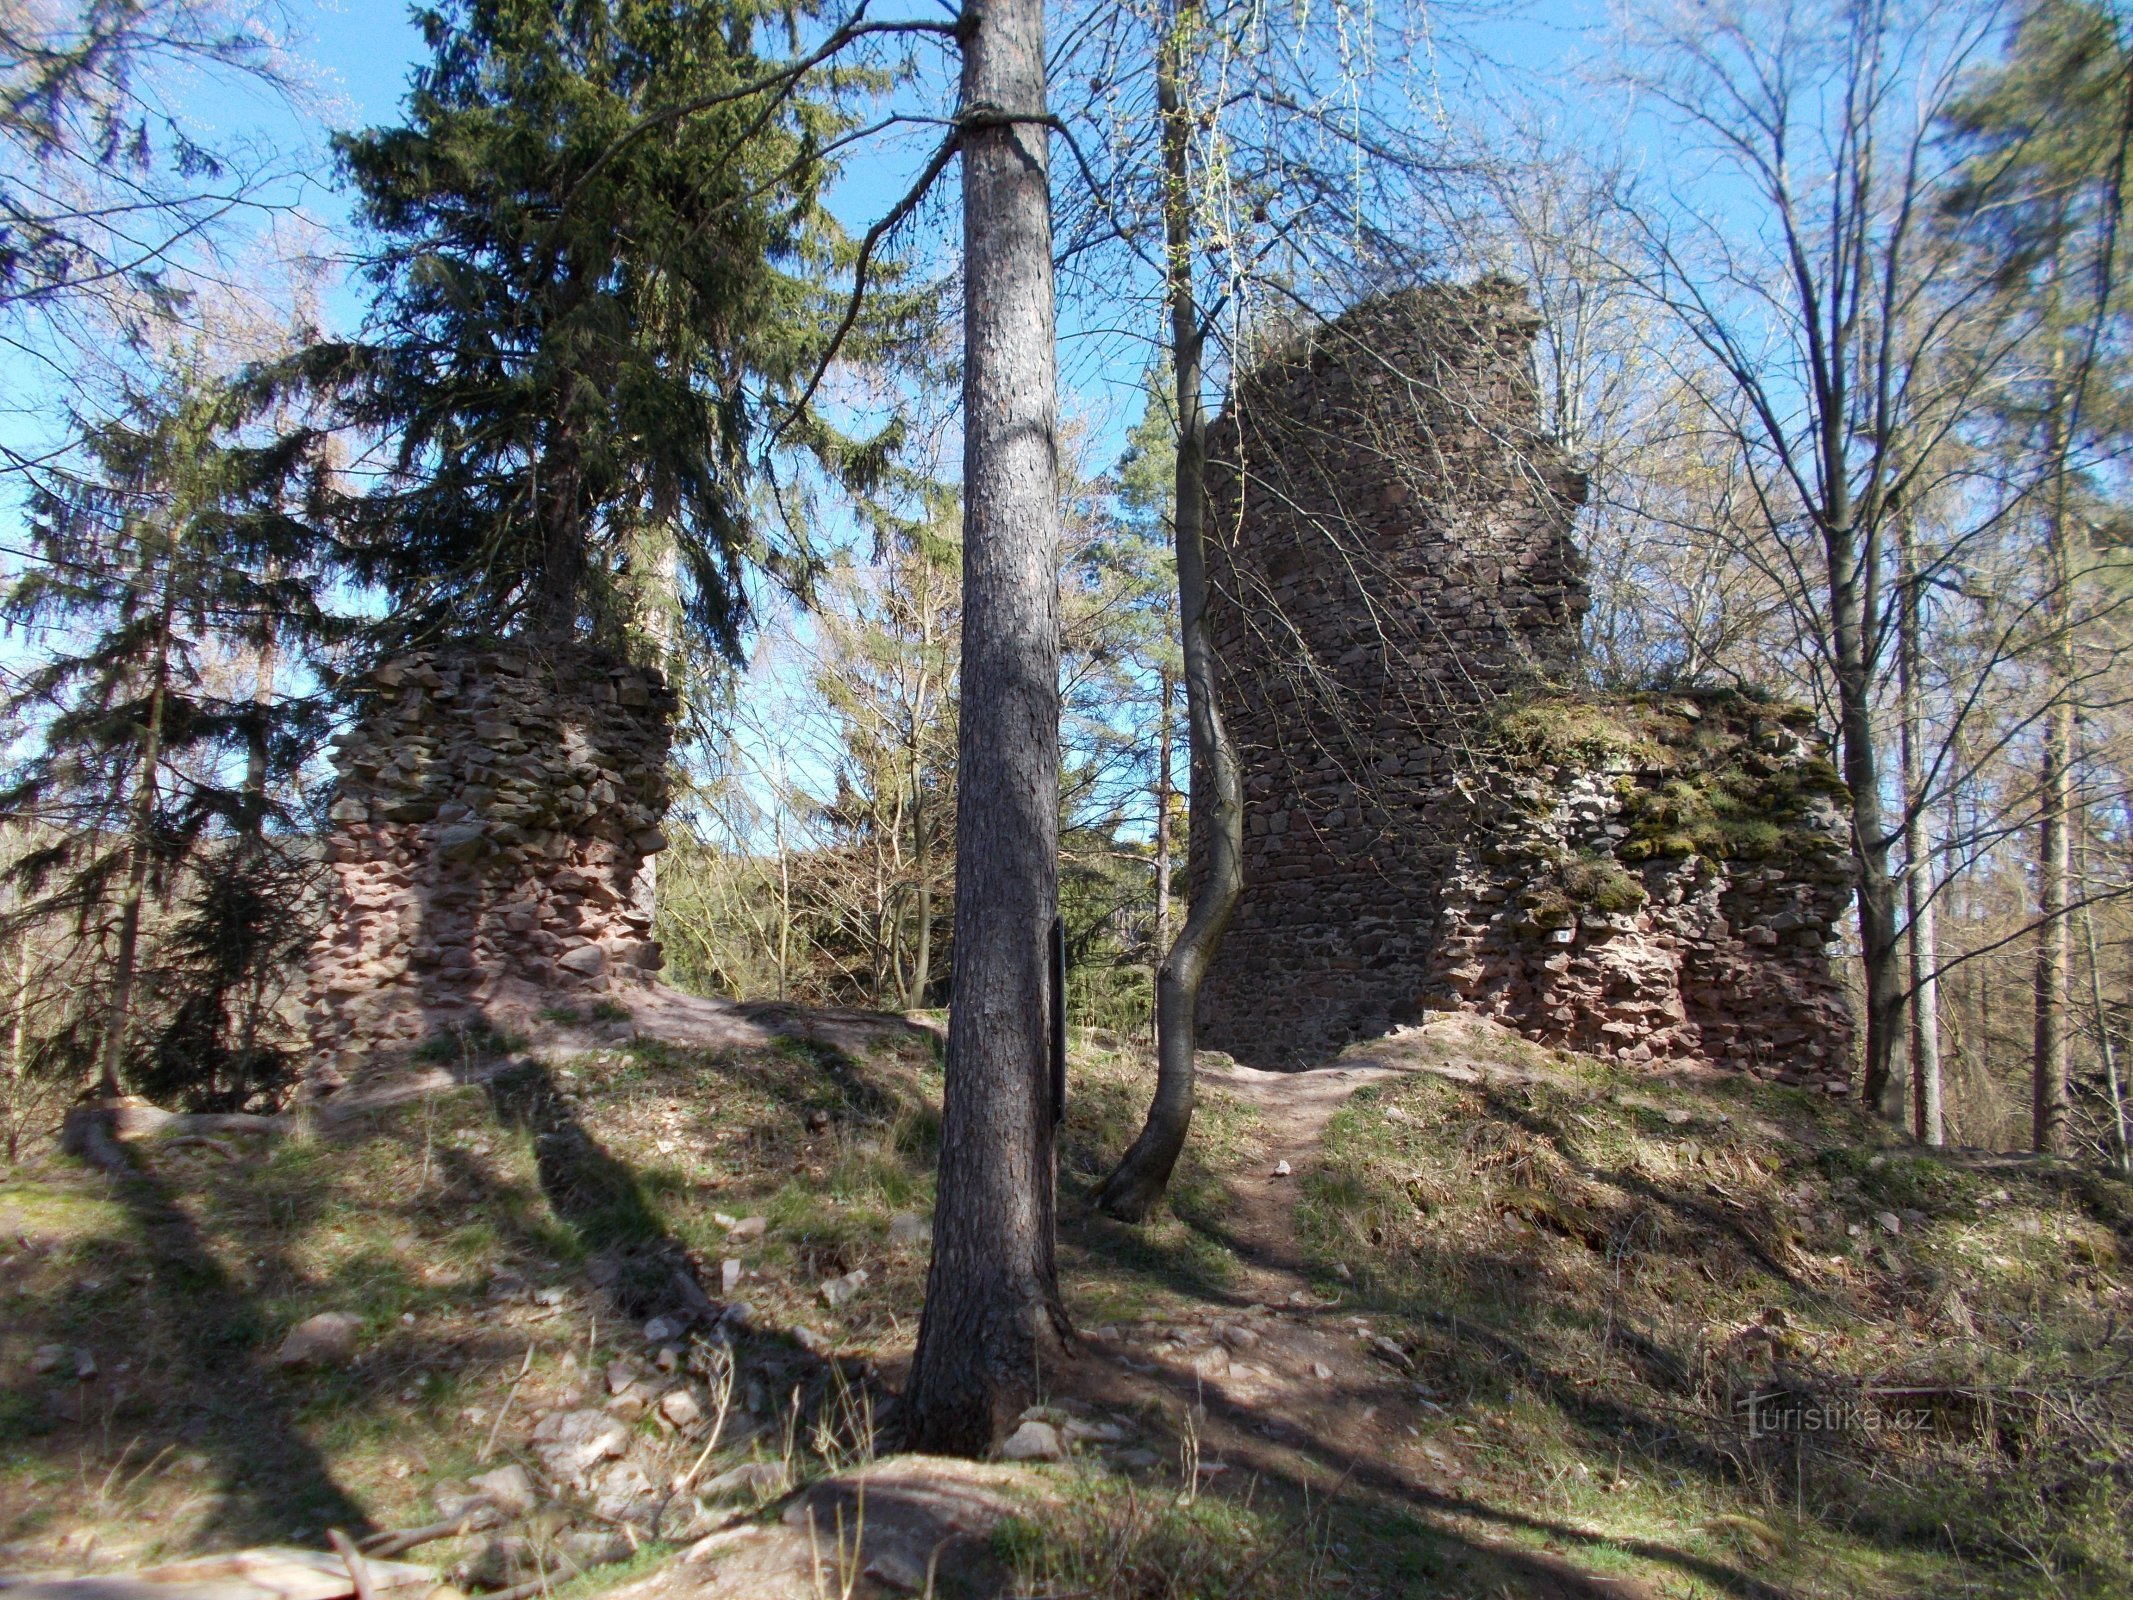 The ruins of the Perštejn castle